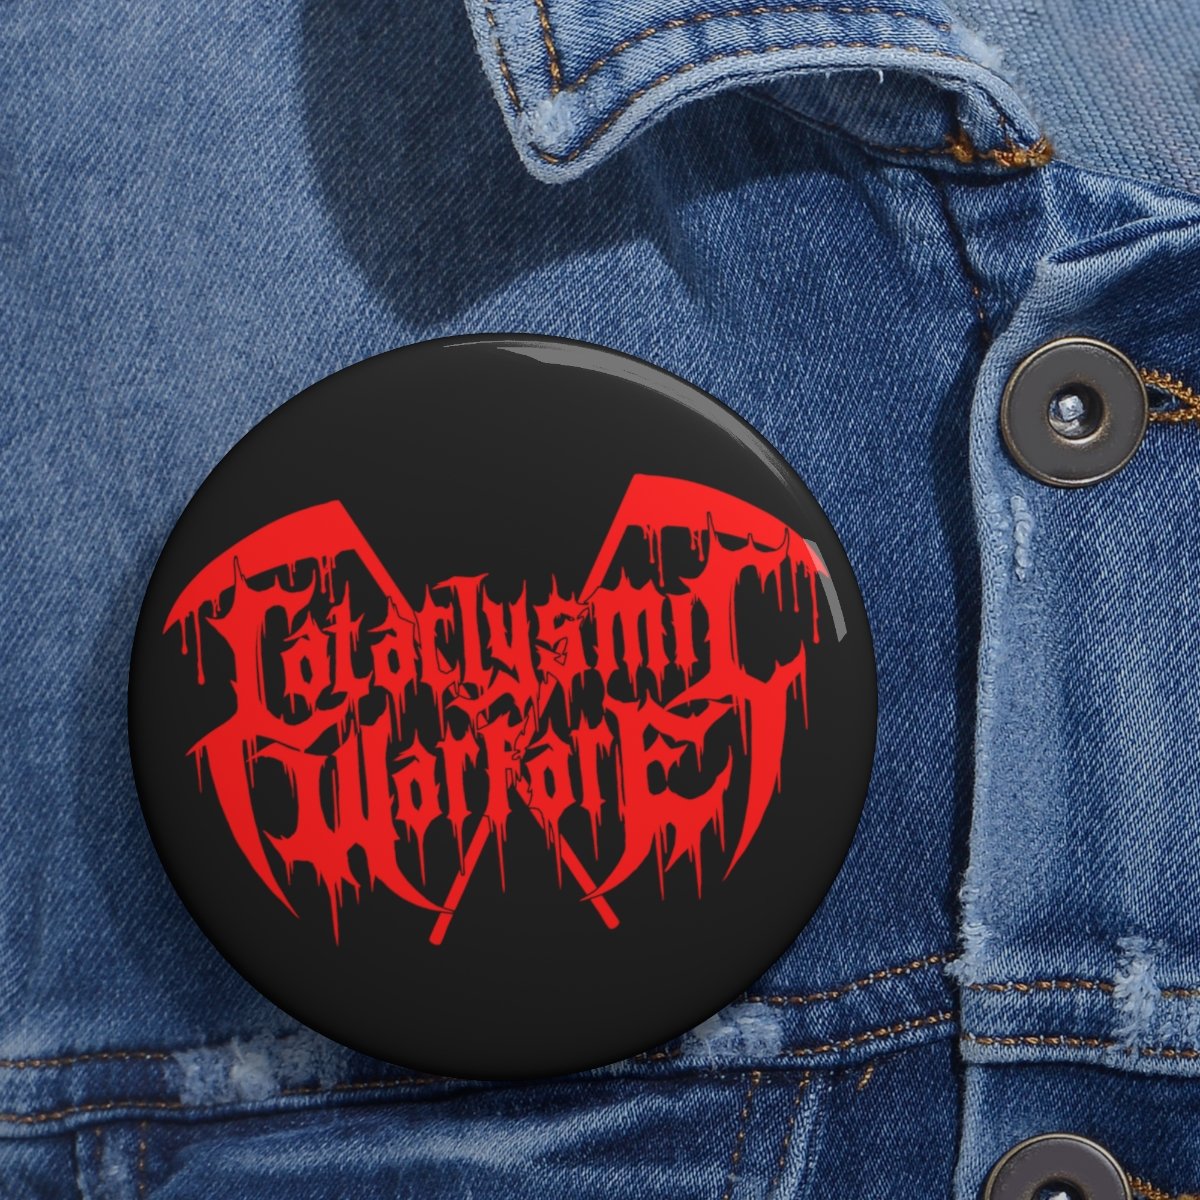 Cataclysmic Warfare Logo Pin Buttons